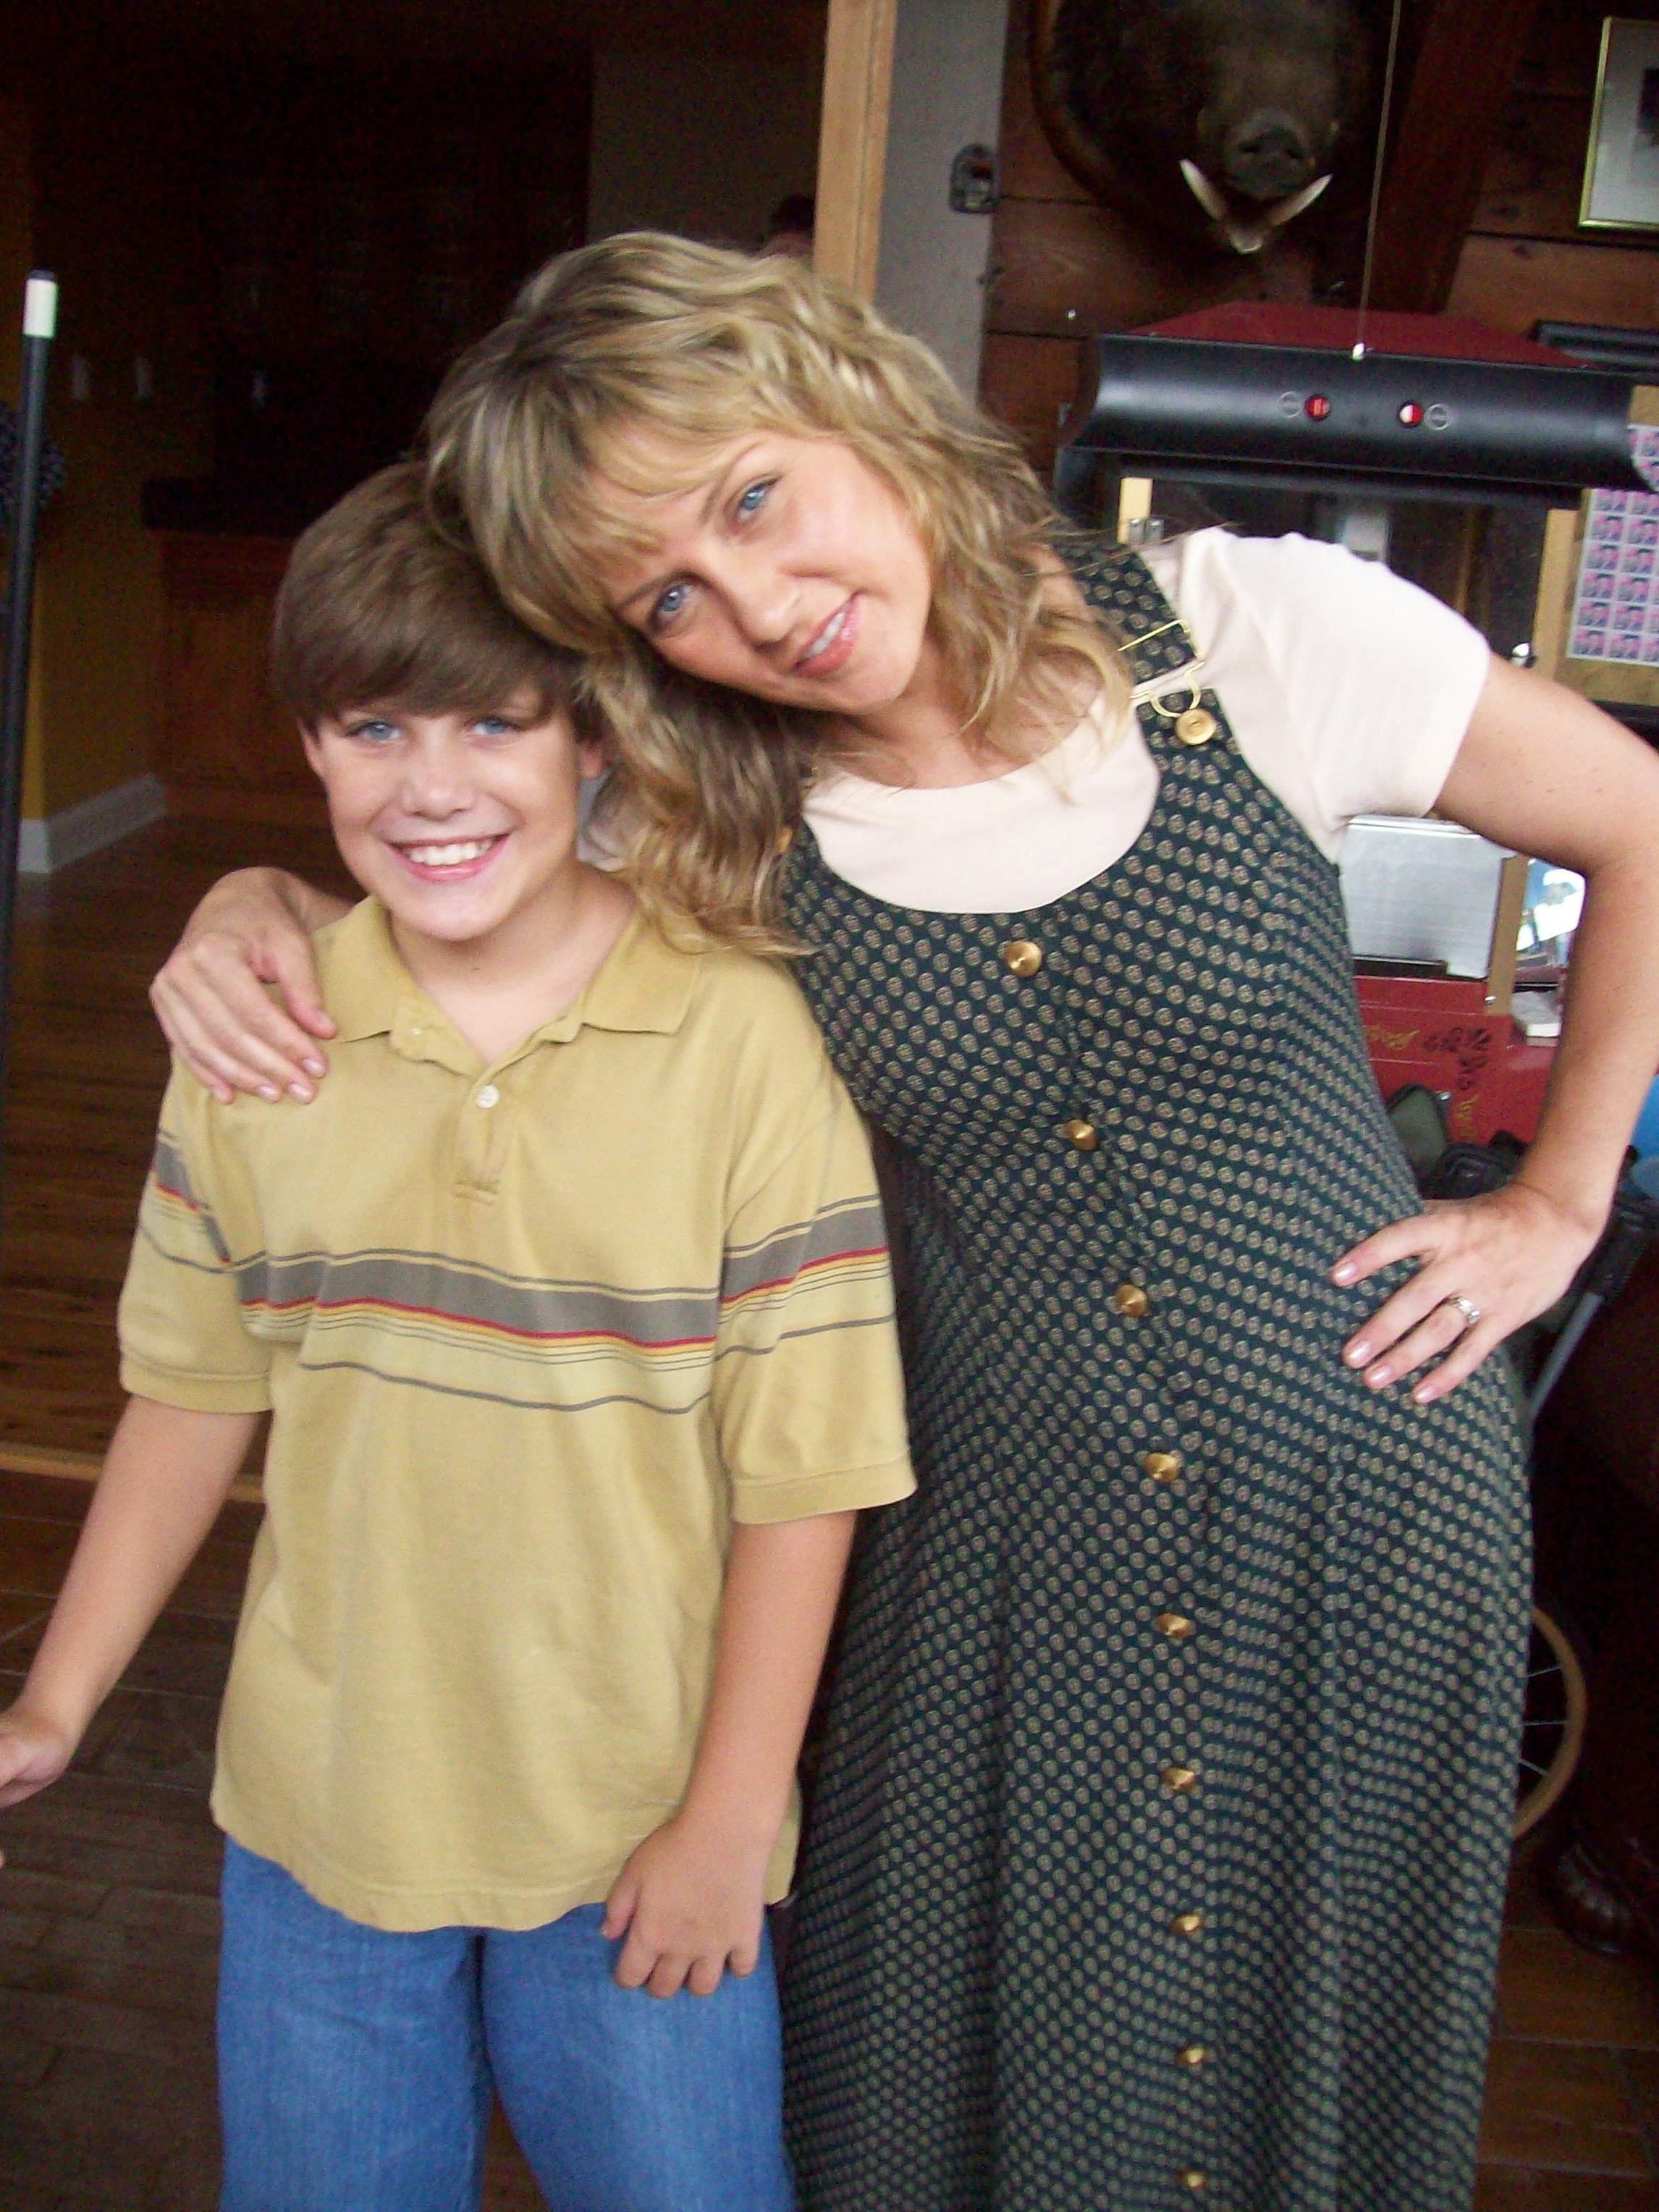 Brock as Young Jack - Green Lantern with Mom Amy Carlson as Jessica Jordan.